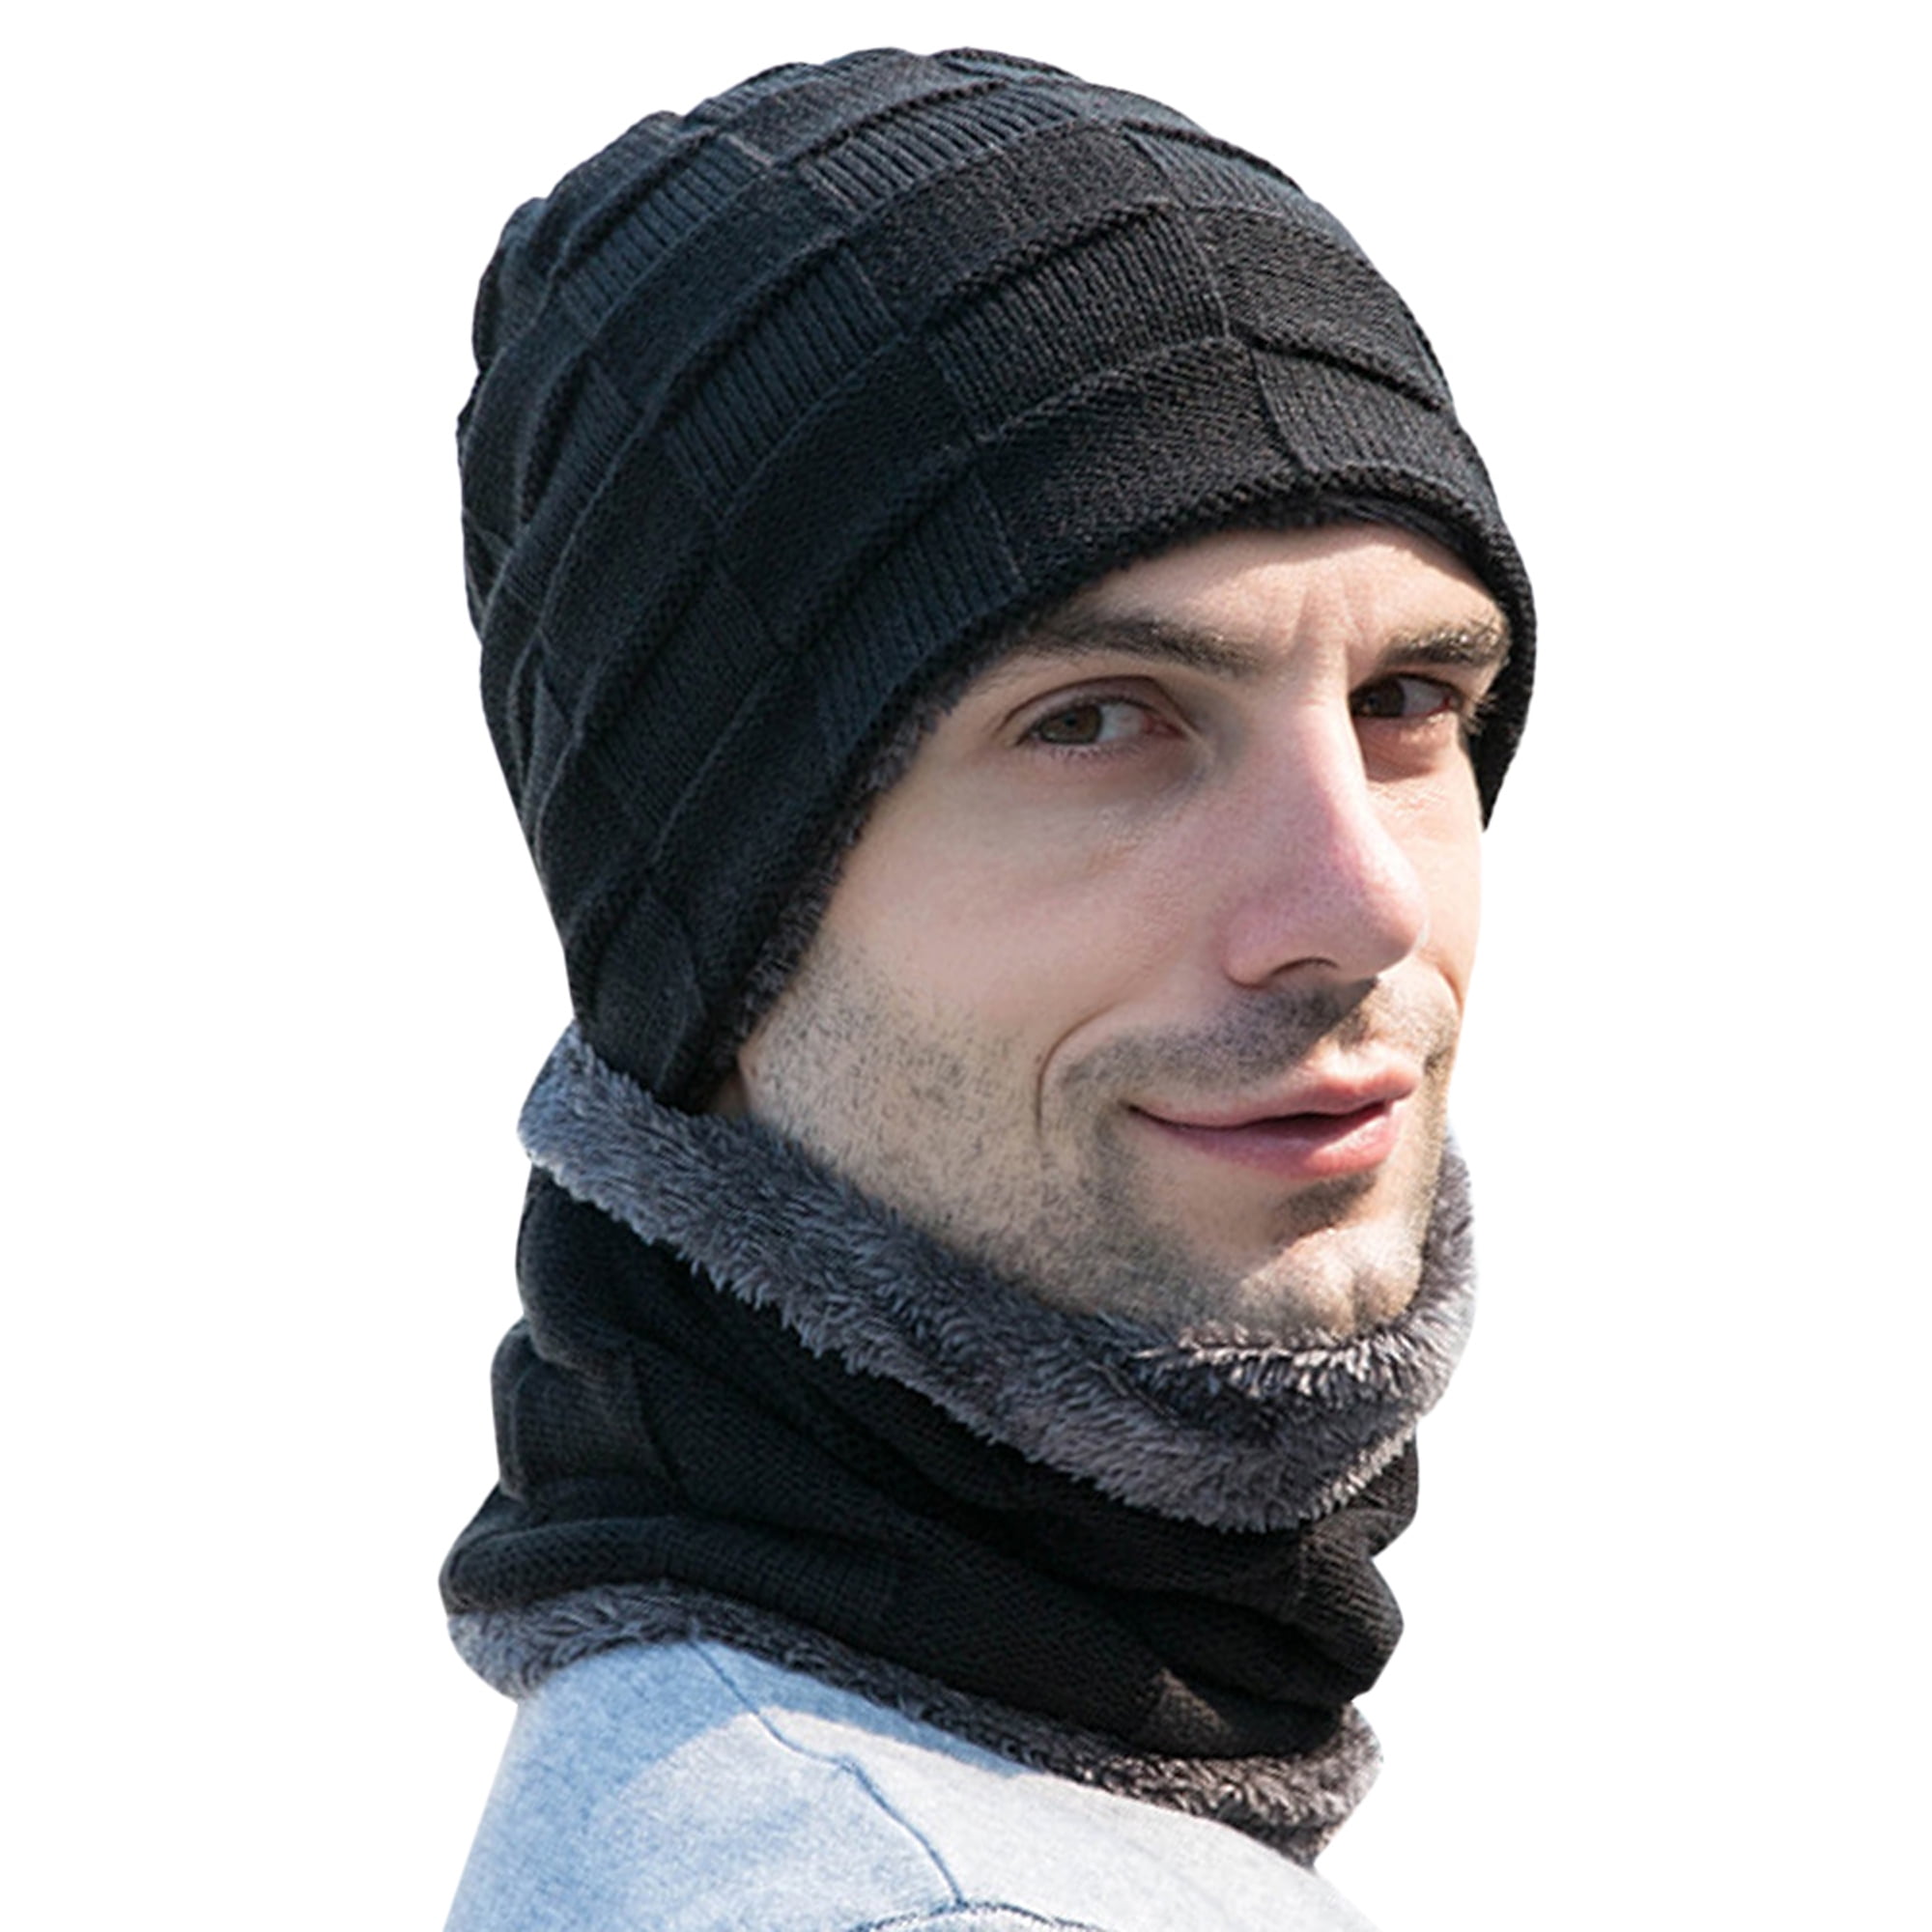 Neck Warmer Winter Fleece Snood Scarf Cap Wrap Thermal Ski Jogging Mens Unisex @ 